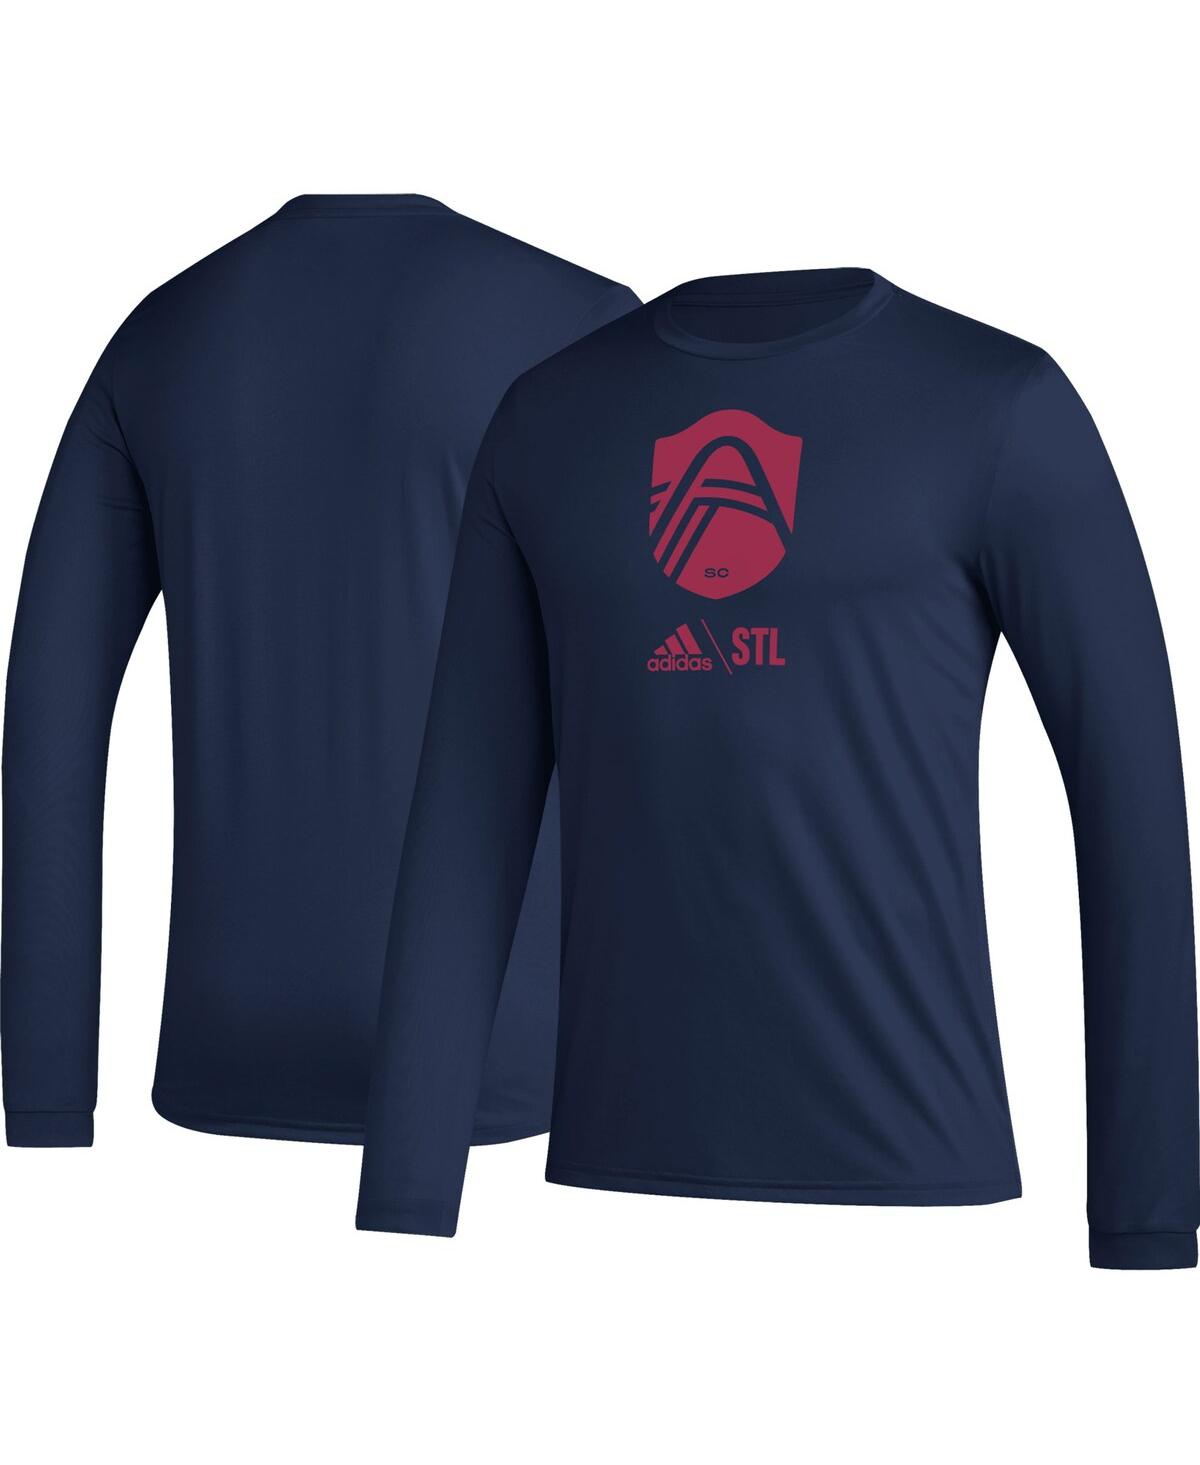 Men's Adidas Navy La Galaxy Club DNA Performance T-Shirt Size: Medium